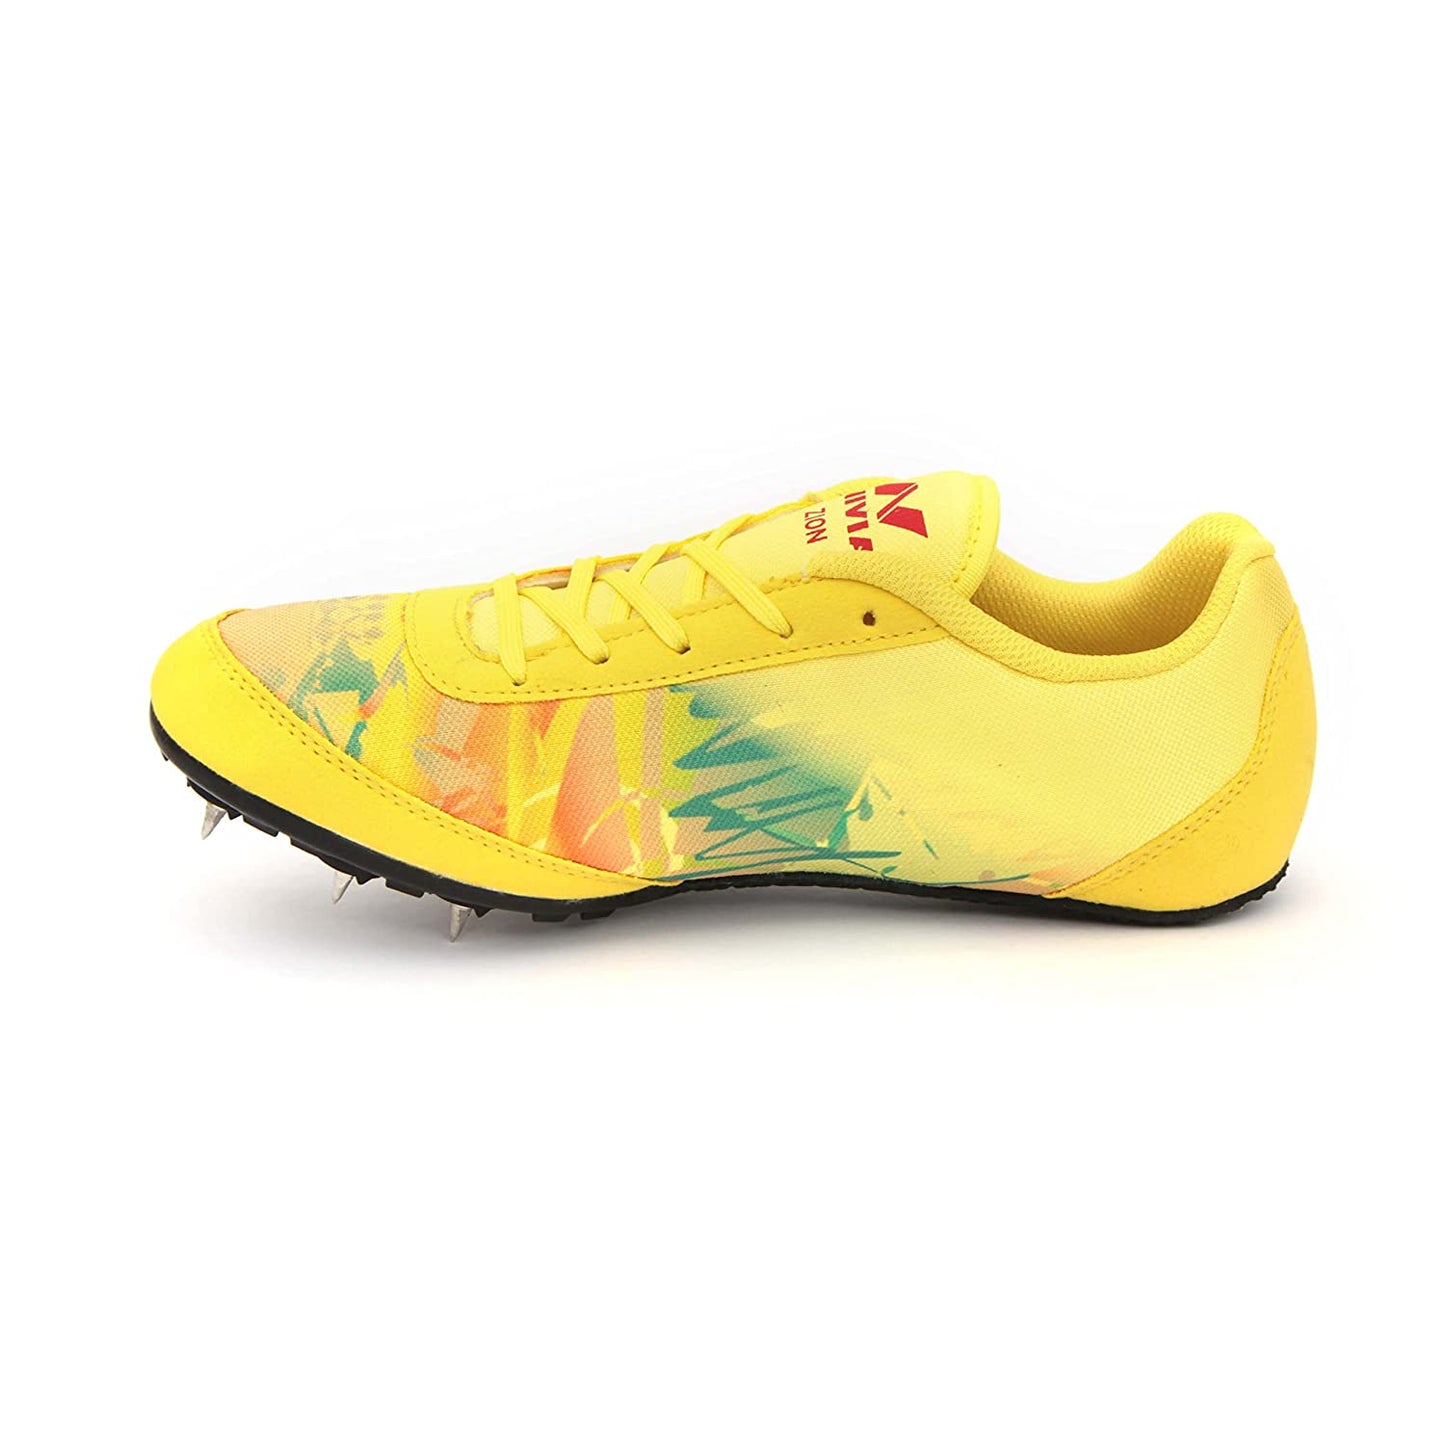 Nivia Zion-1 2017 Track & Field Shoe, Yellow - Best Price online Prokicksports.com